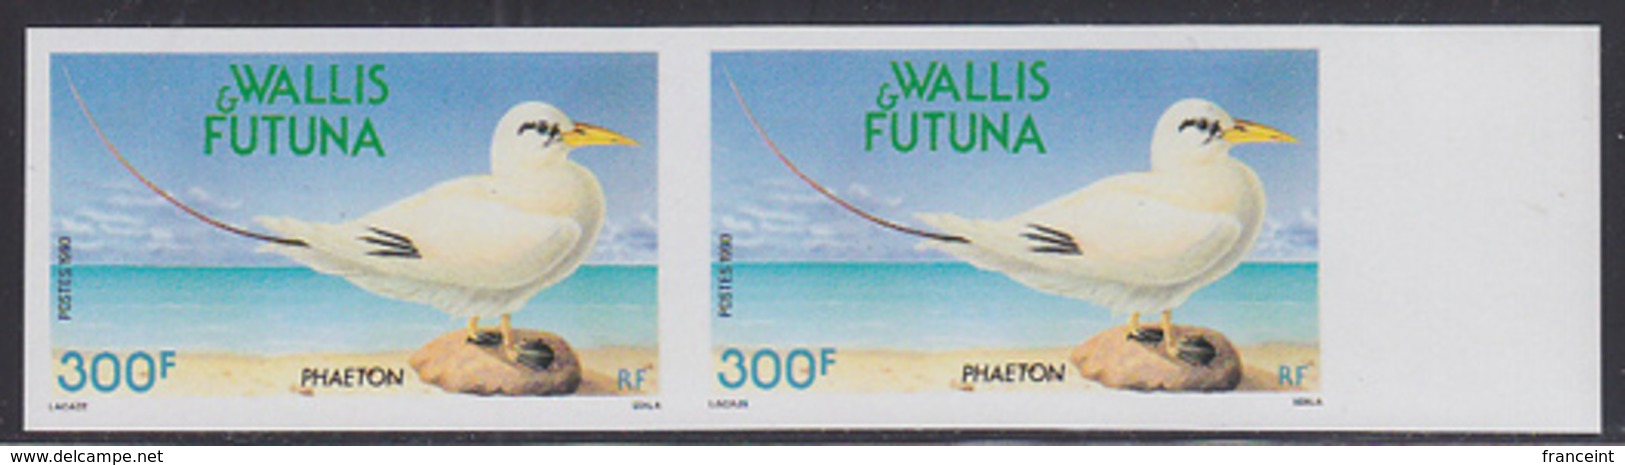 WALLIS & FUTUNA (1990) Phaeton. Imperforate Pair. Scott No 393, Yvert No 398. - Sin Dentar, Pruebas De Impresión Y Variedades